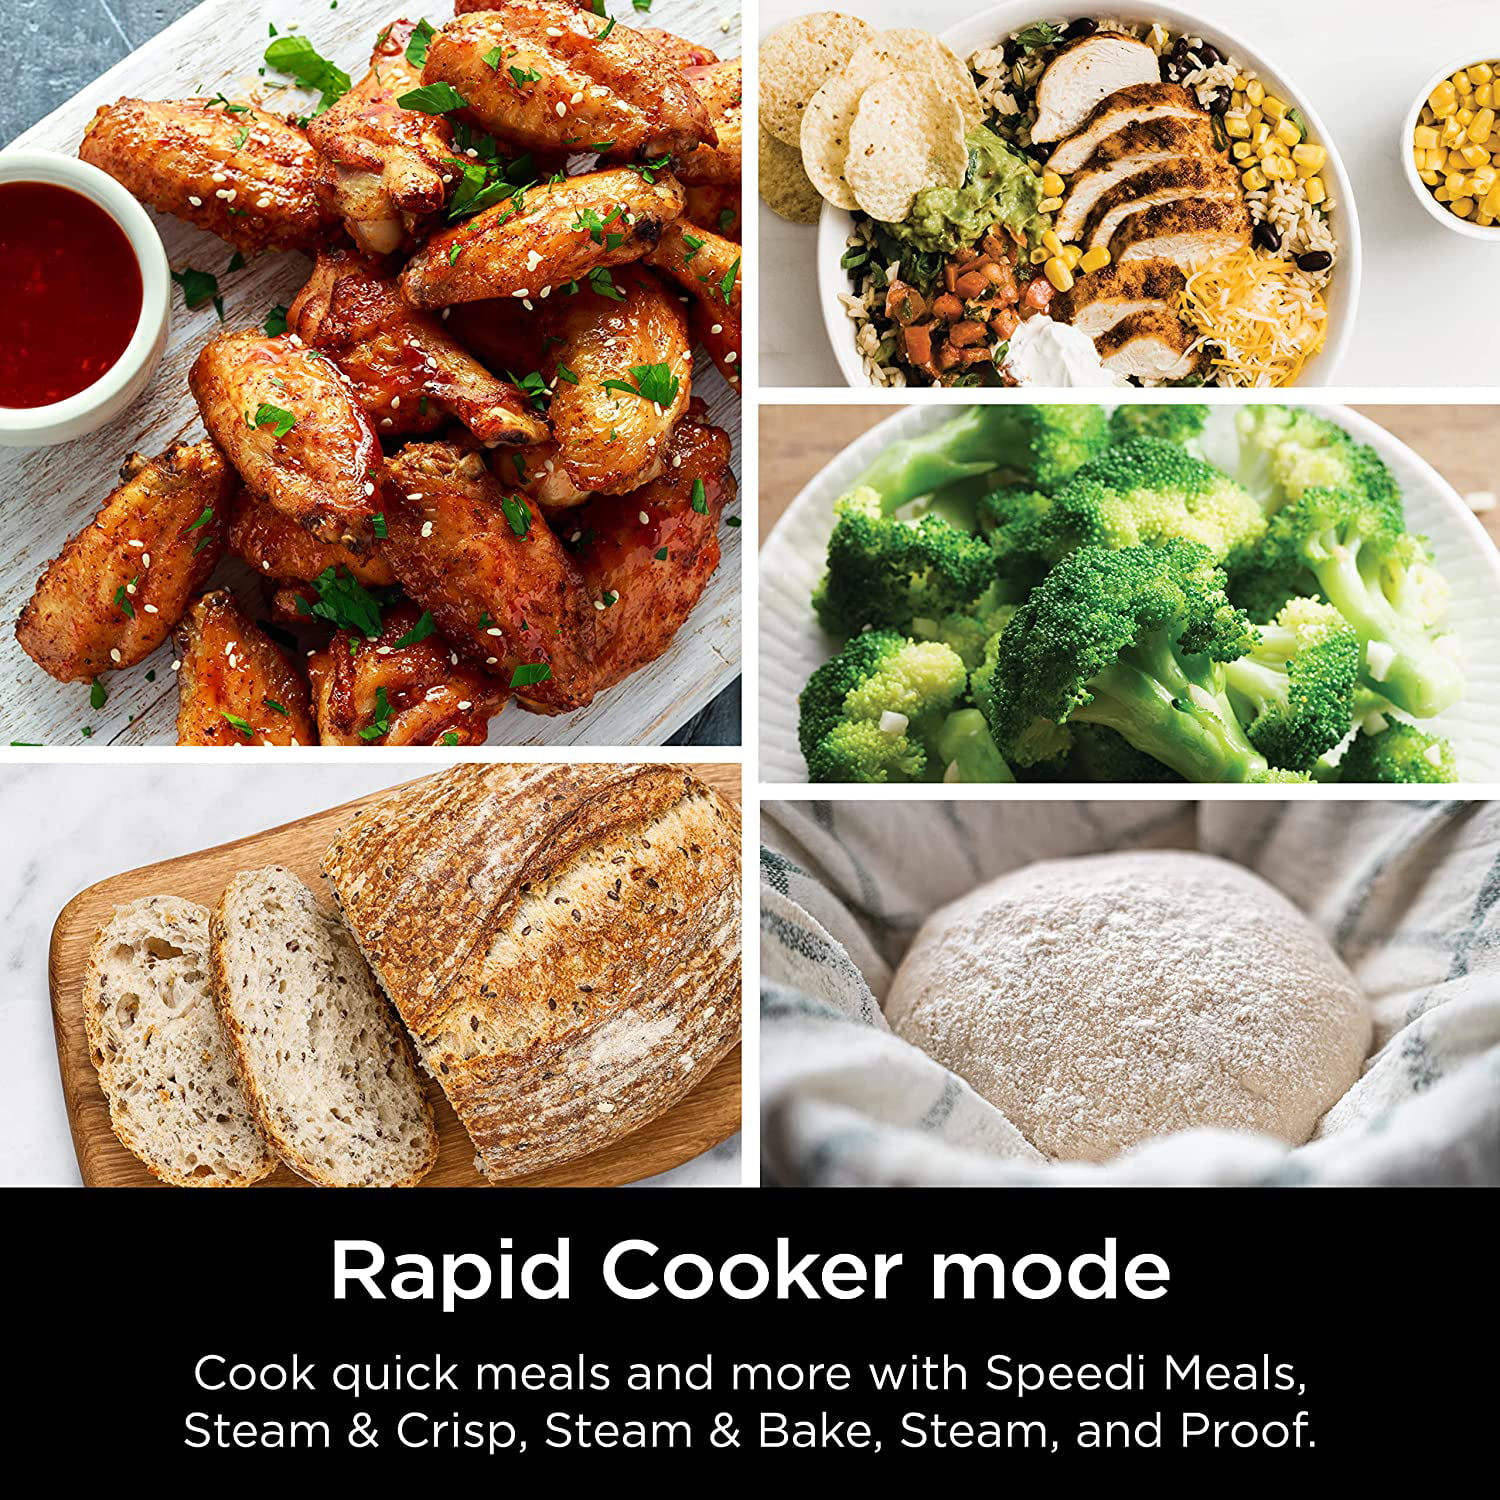 Ninja Speedi Rapid Cooker & Air Fryer, 6-Quart Capacity, 12-in-1 Functions  to Steam, Bake, Roast, Sear, Sauté, Slow Cook, Sous Vide & More